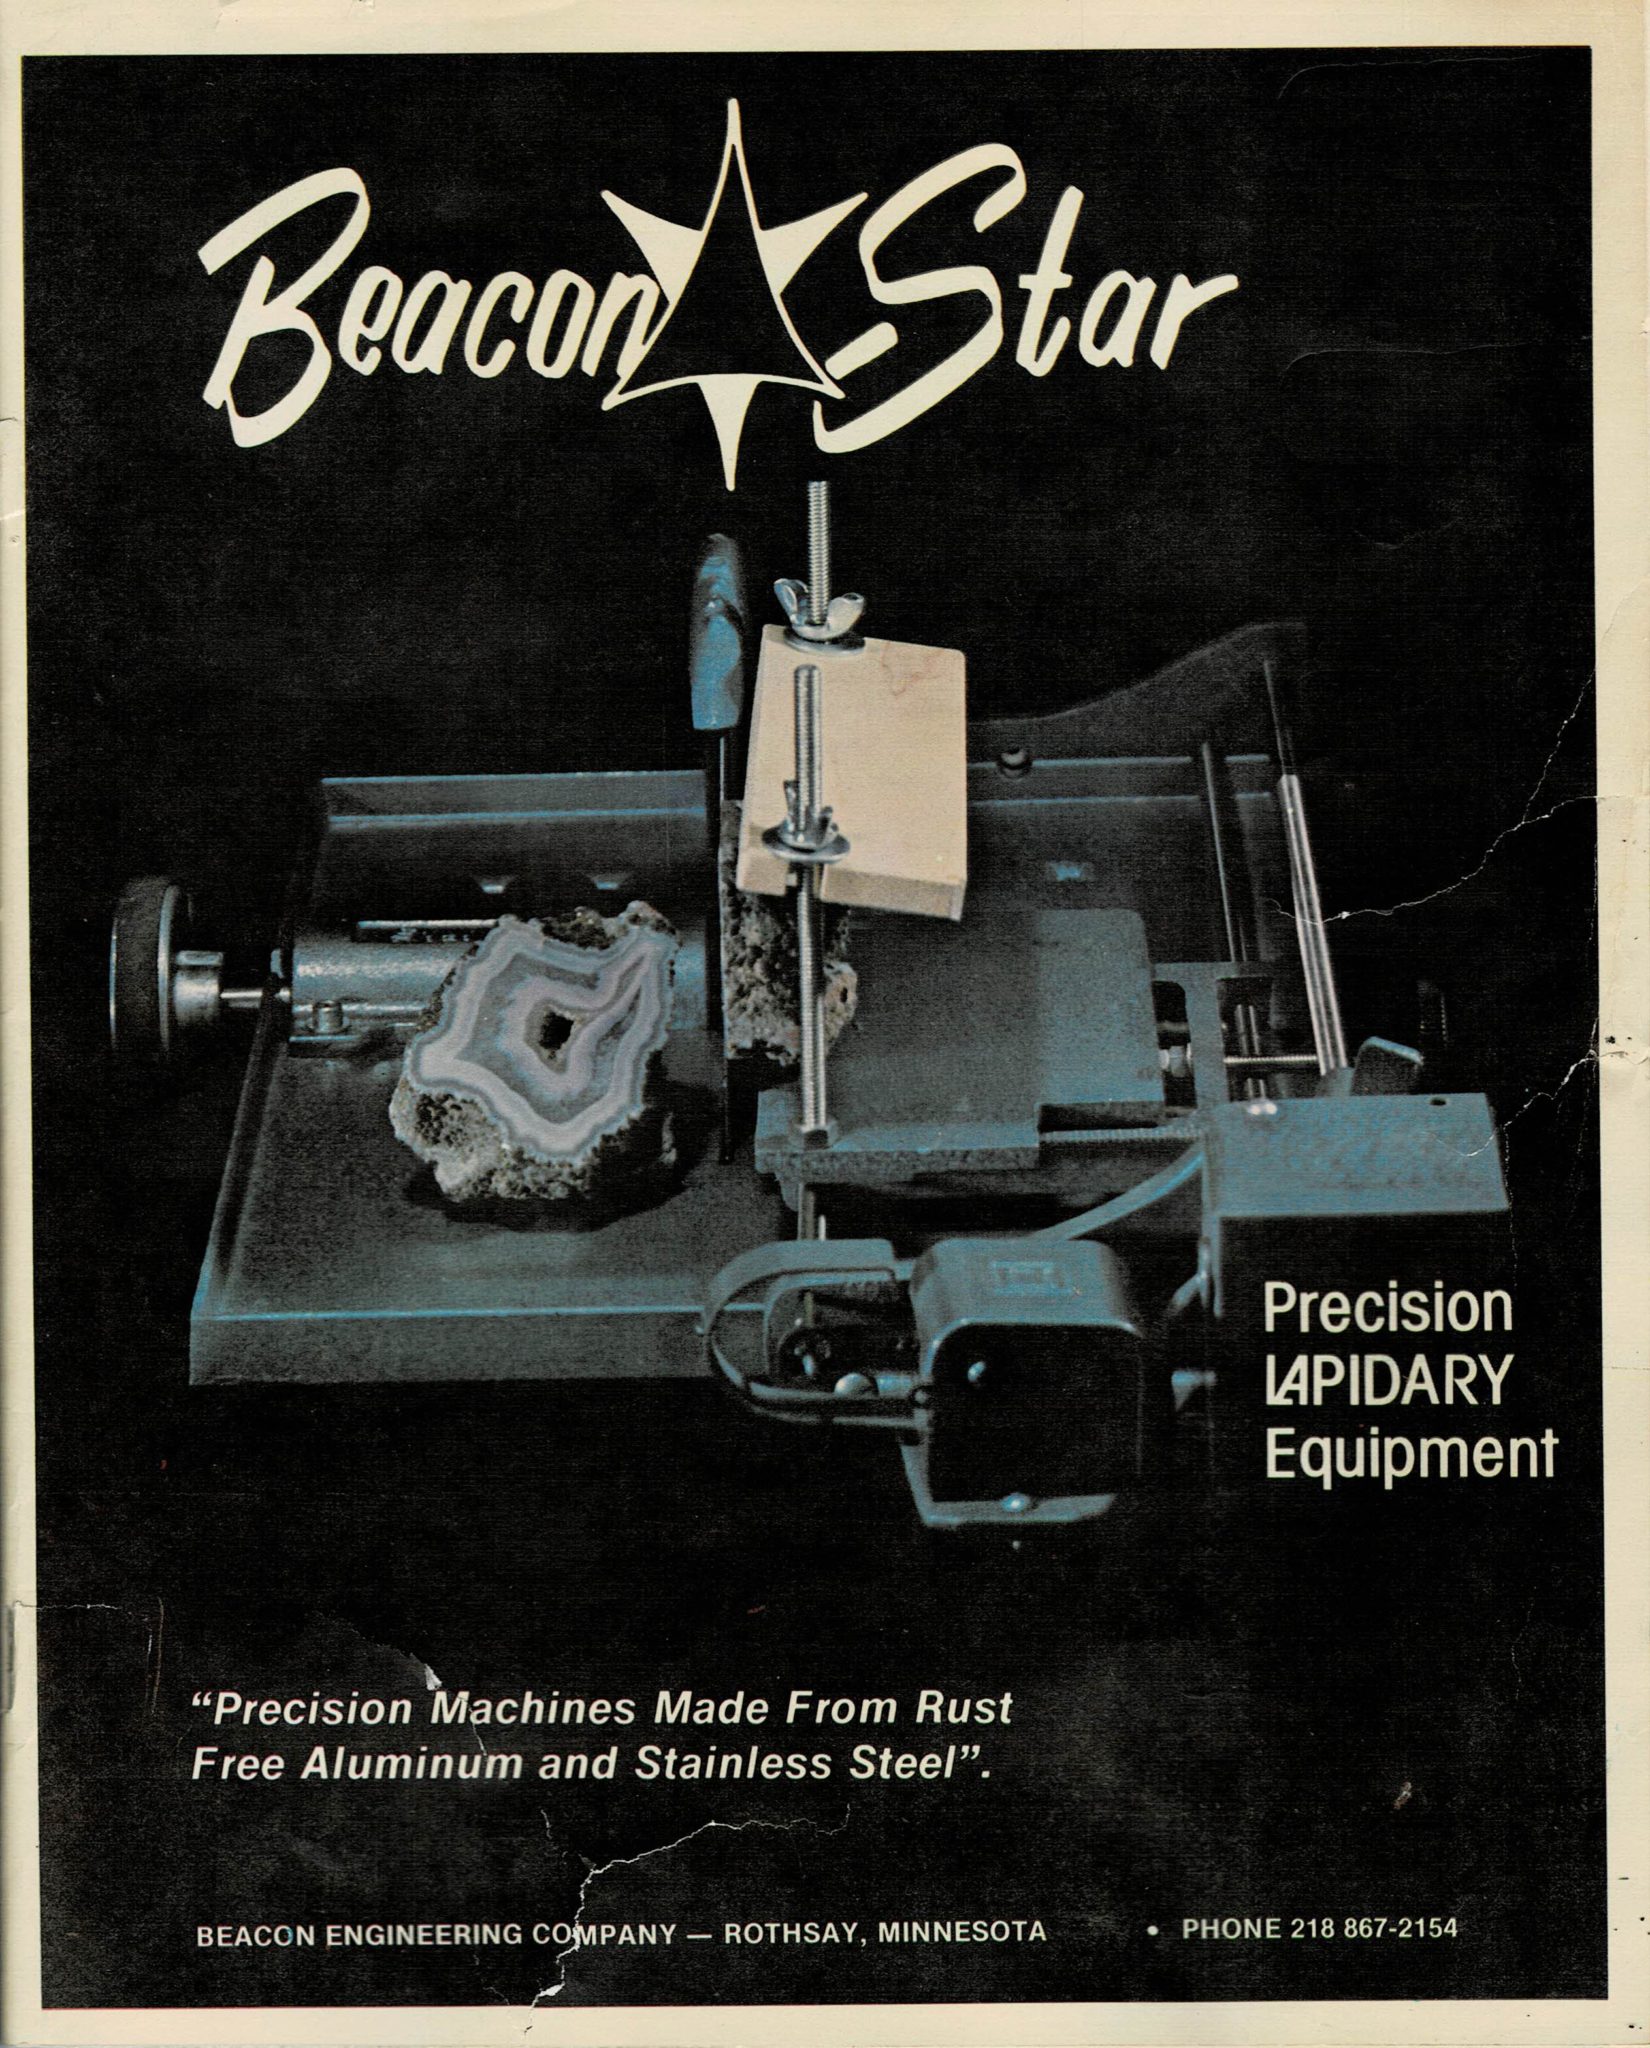 Beacon Star Lapidary Catalog Cover